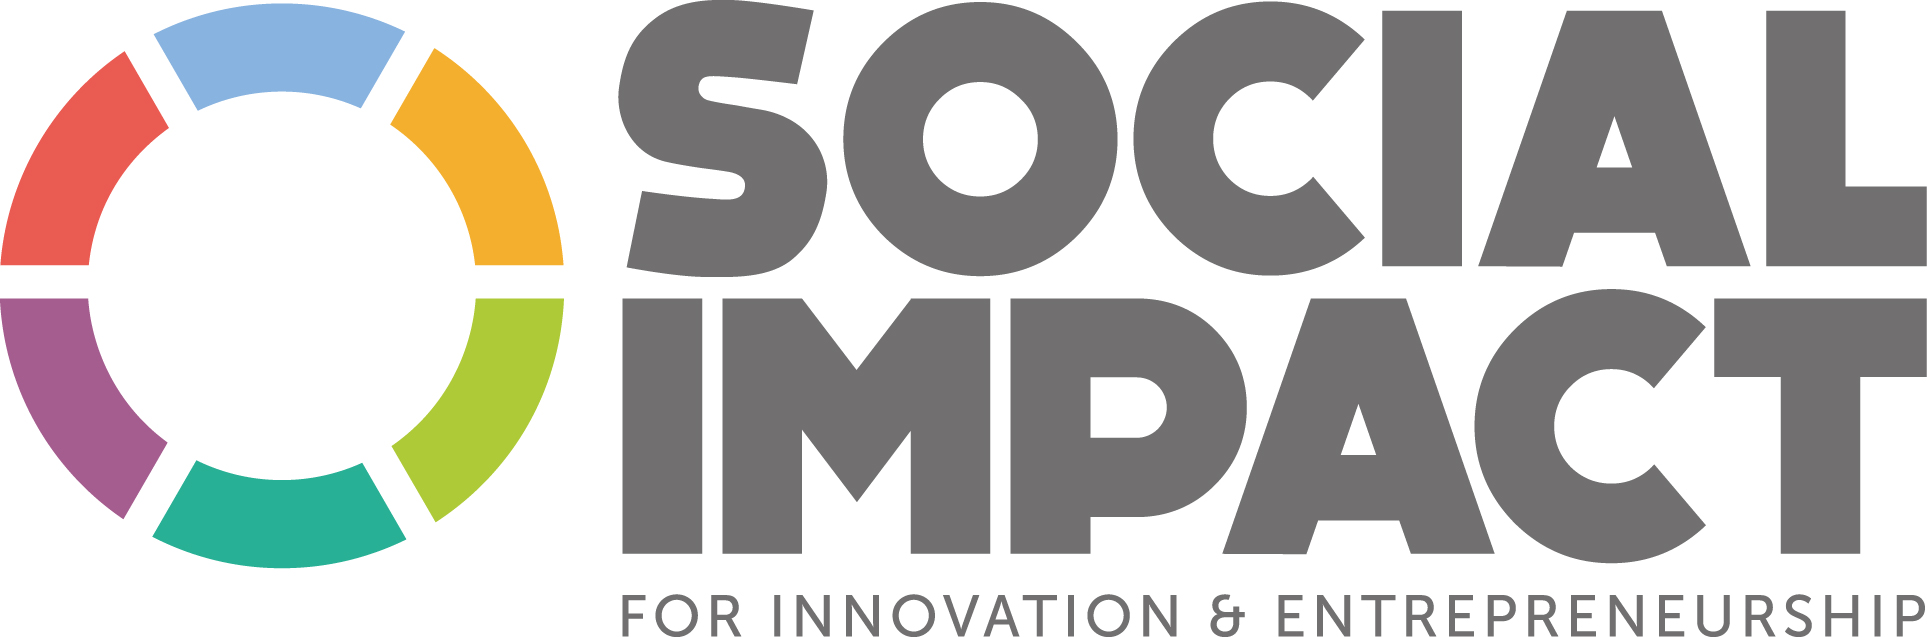 social_impact_logo_screen.jpg